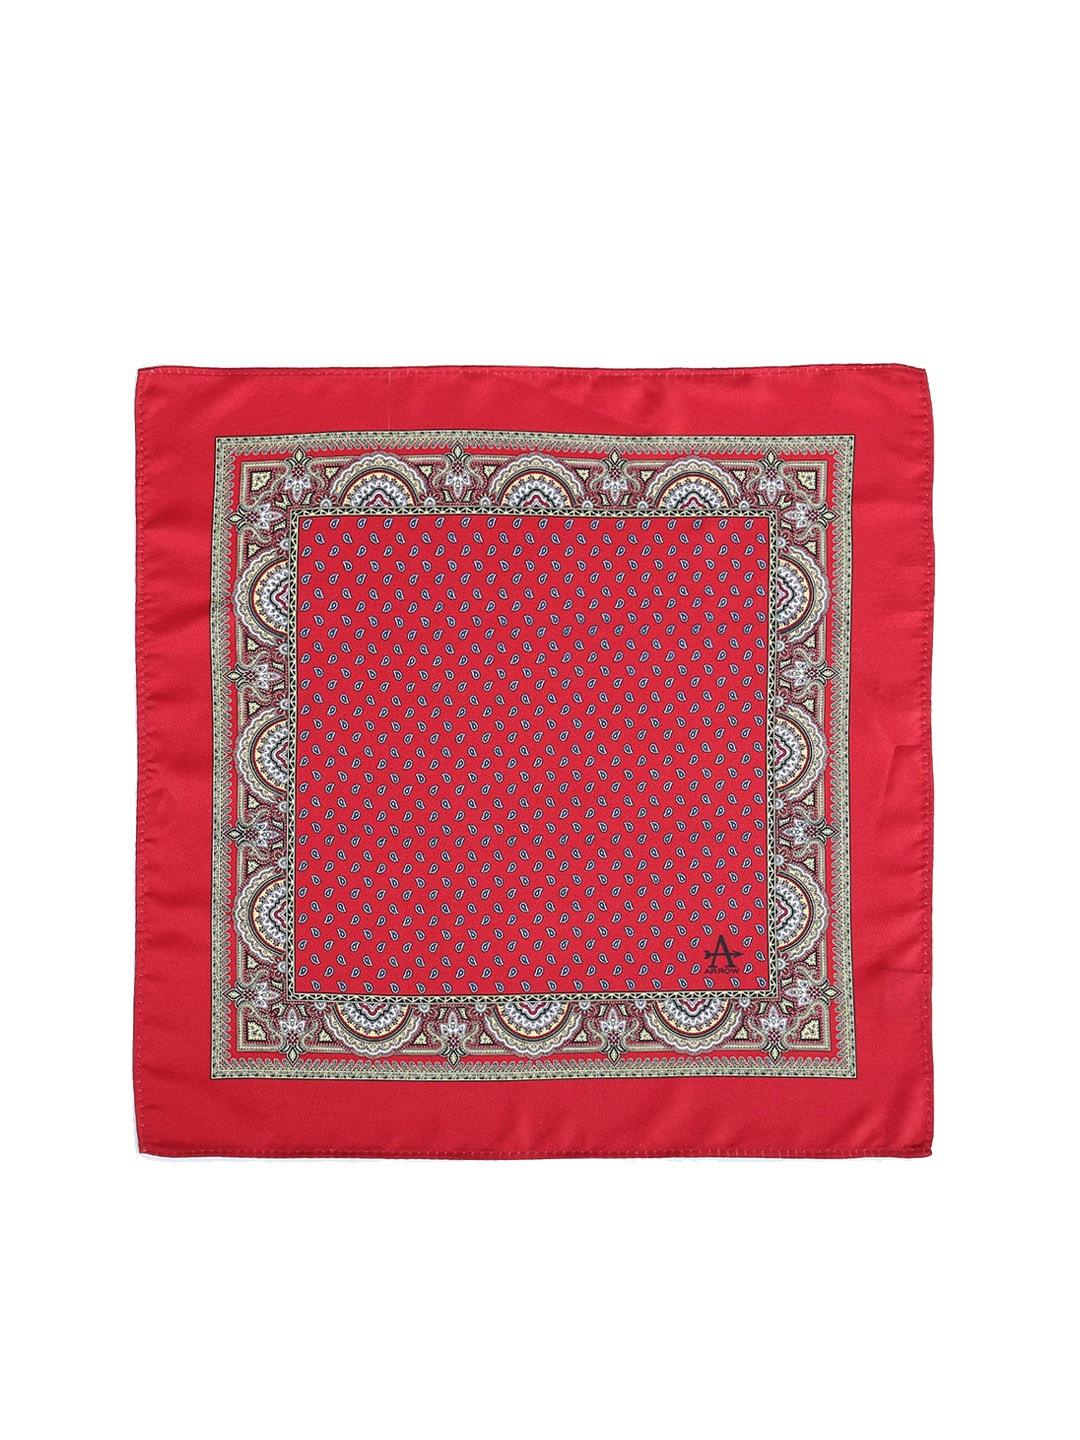 arrow ethnic motifs printed pocket square